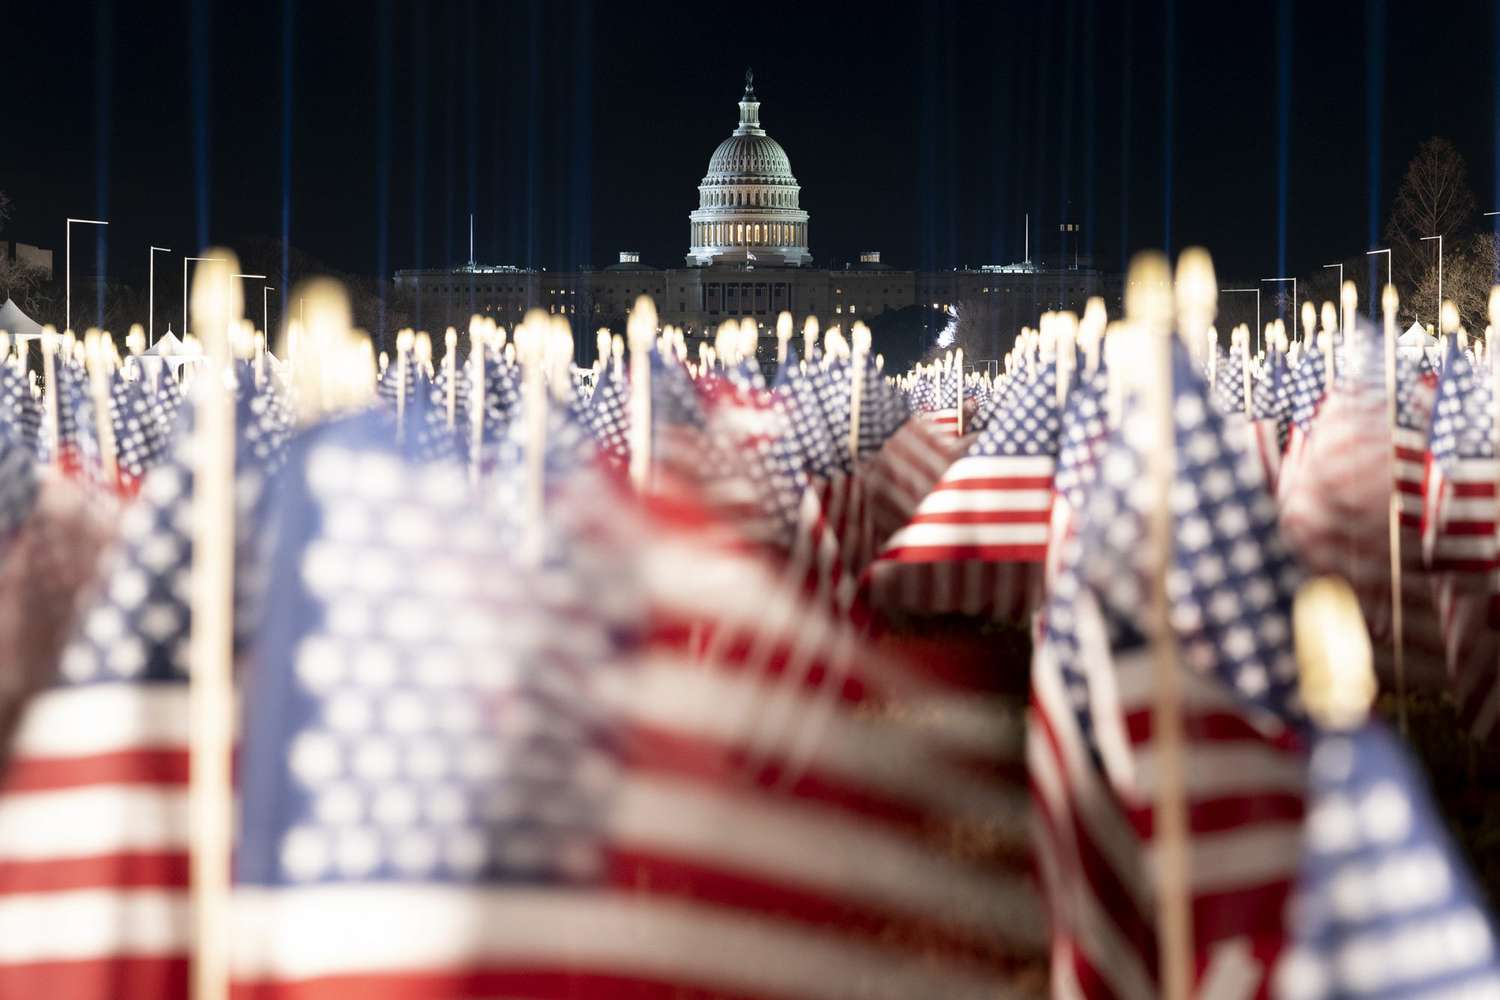 National Mall Turned Into 'Field of Flags' Ahead of Joe Biden's Inauguration